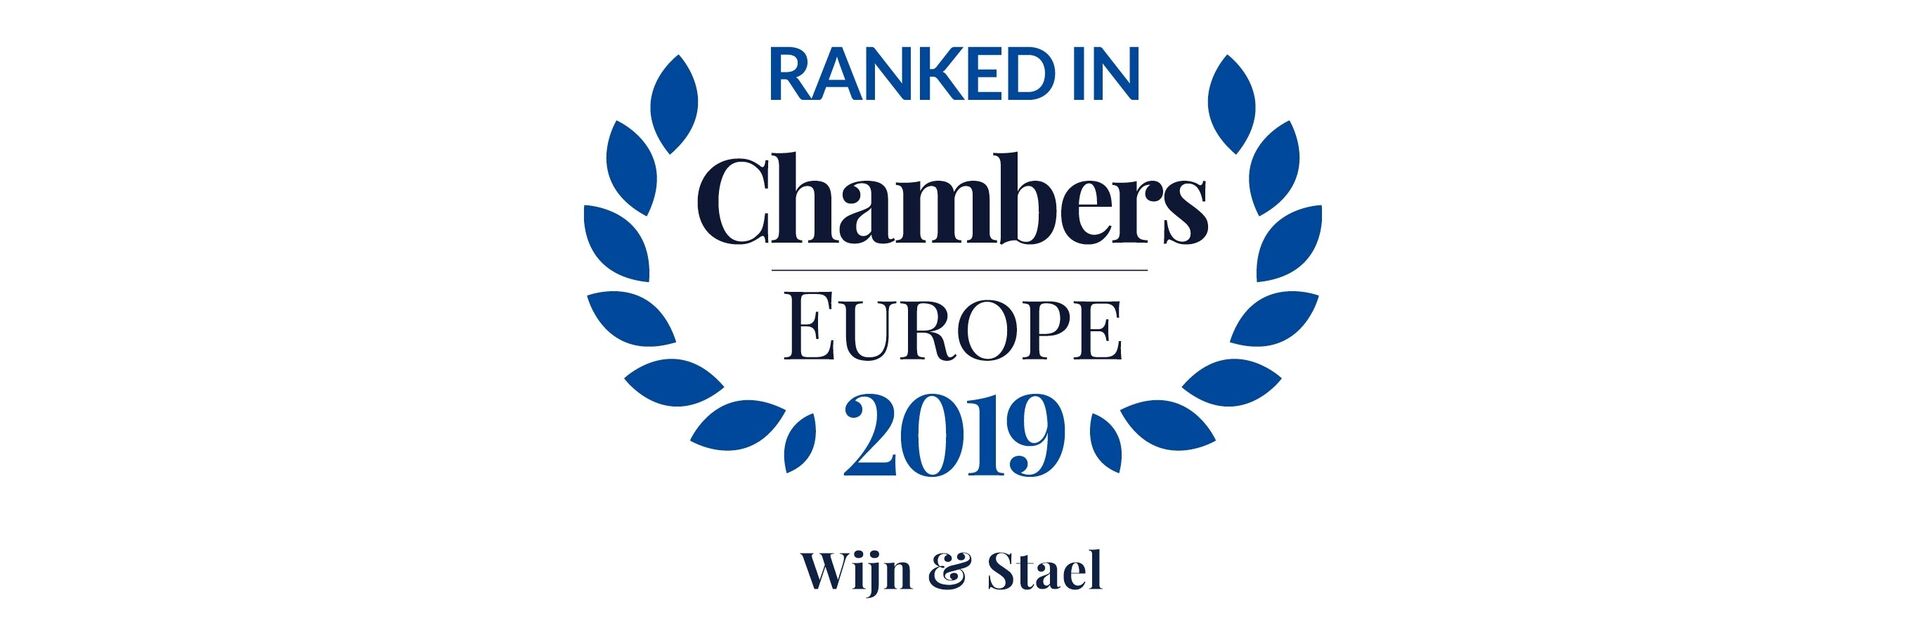 Rankings Chambers Europe Guide 2019